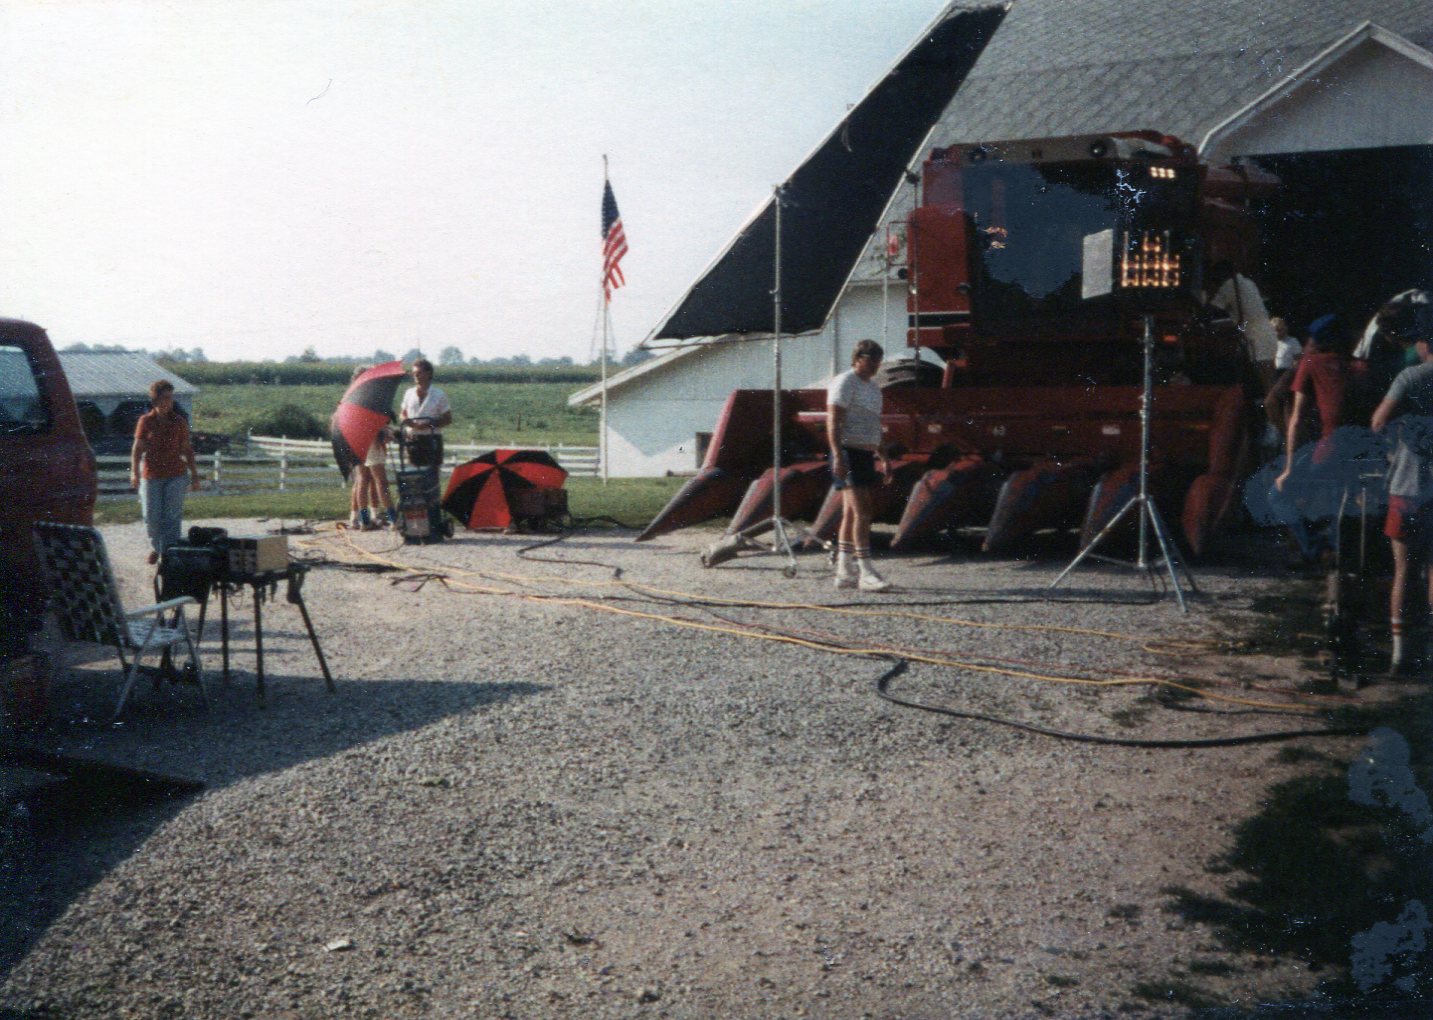 Shooting a Farm Bureau commercial